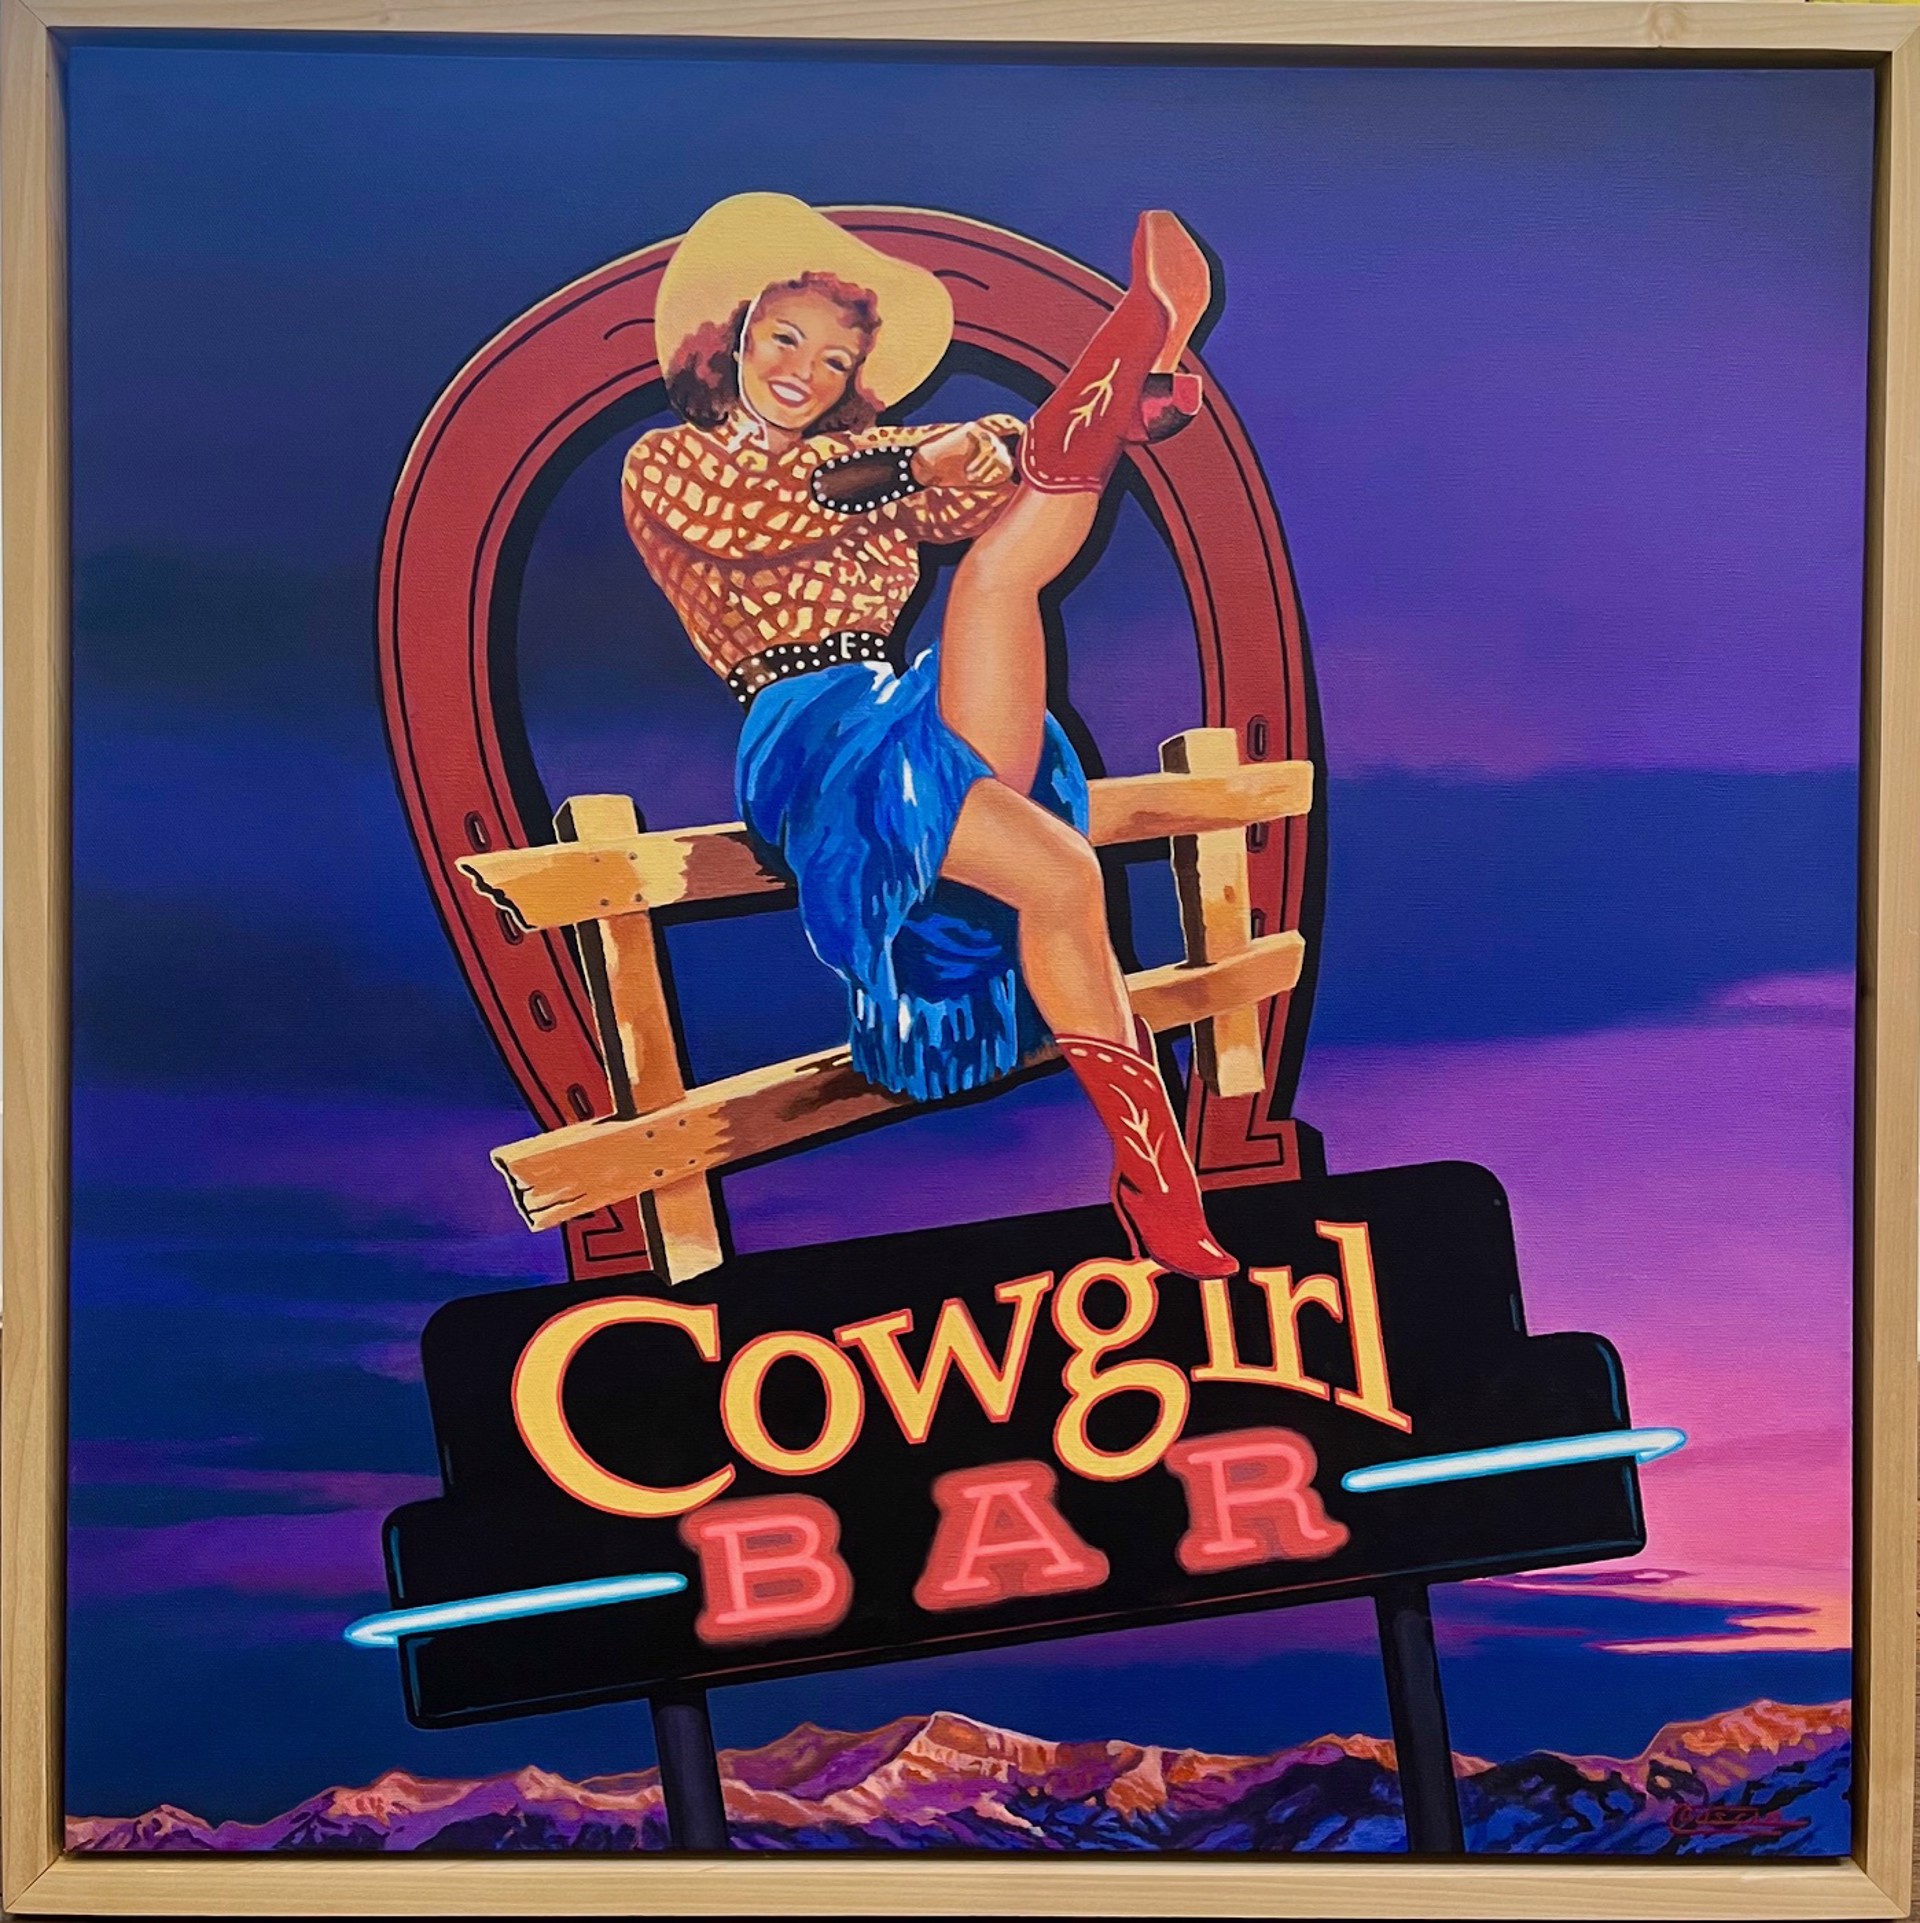 Cowgirl Bar by Bruce Cascia